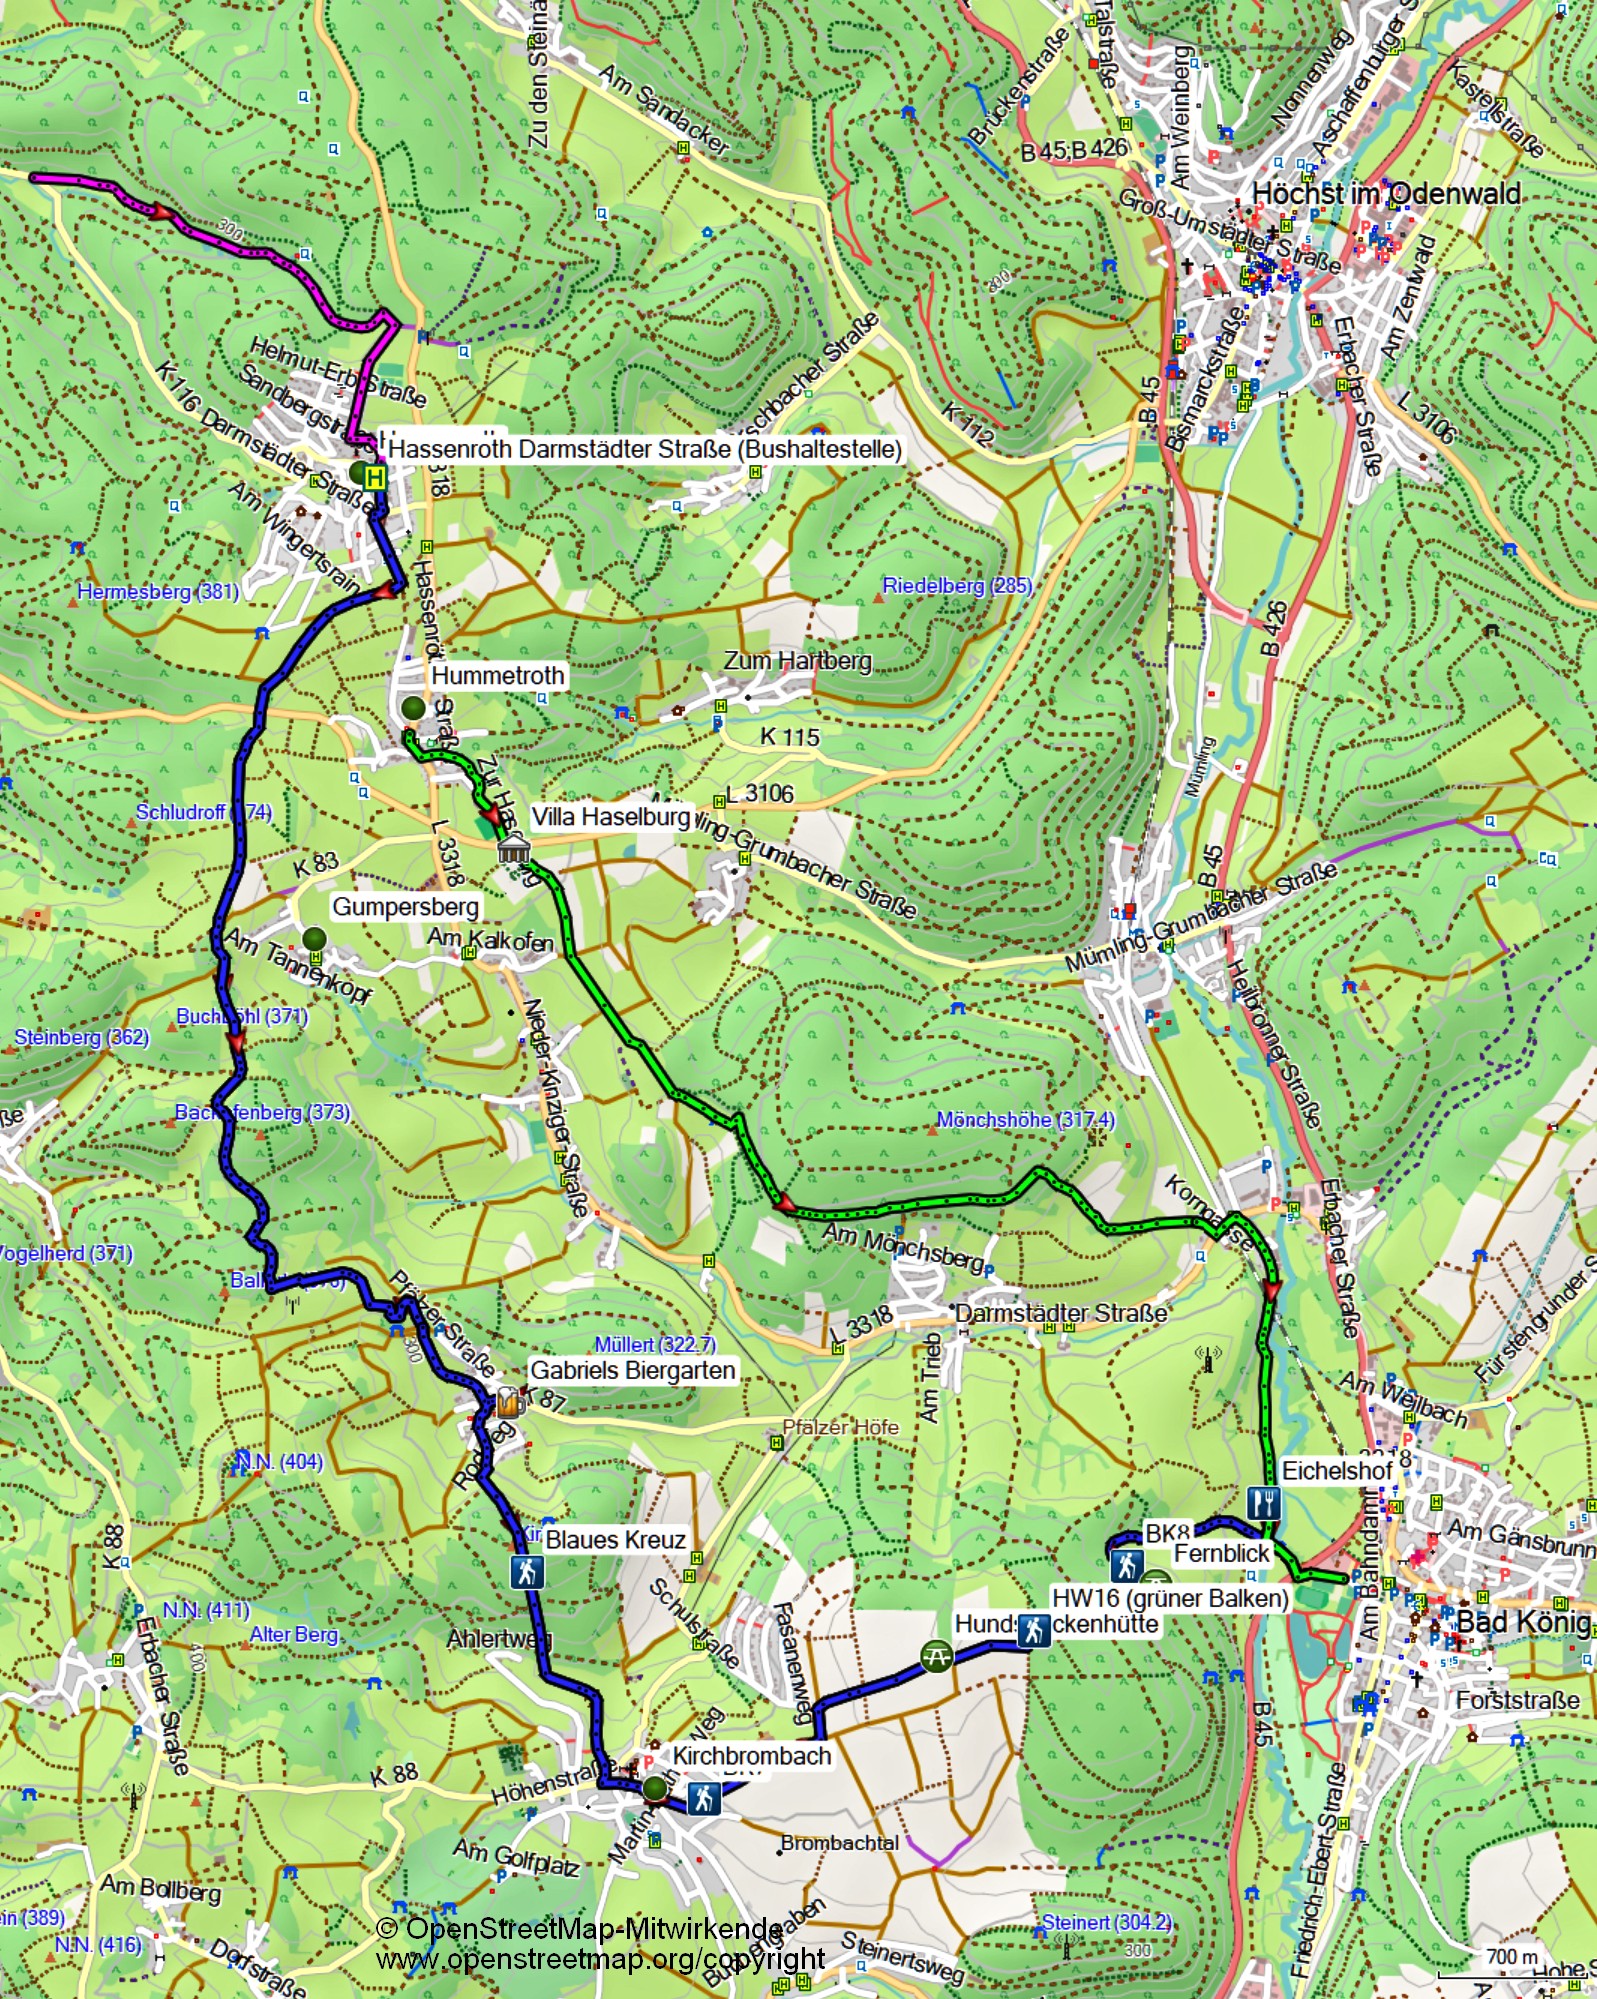 Ober-Klingen-Bad-Koenig-Karte.jpg